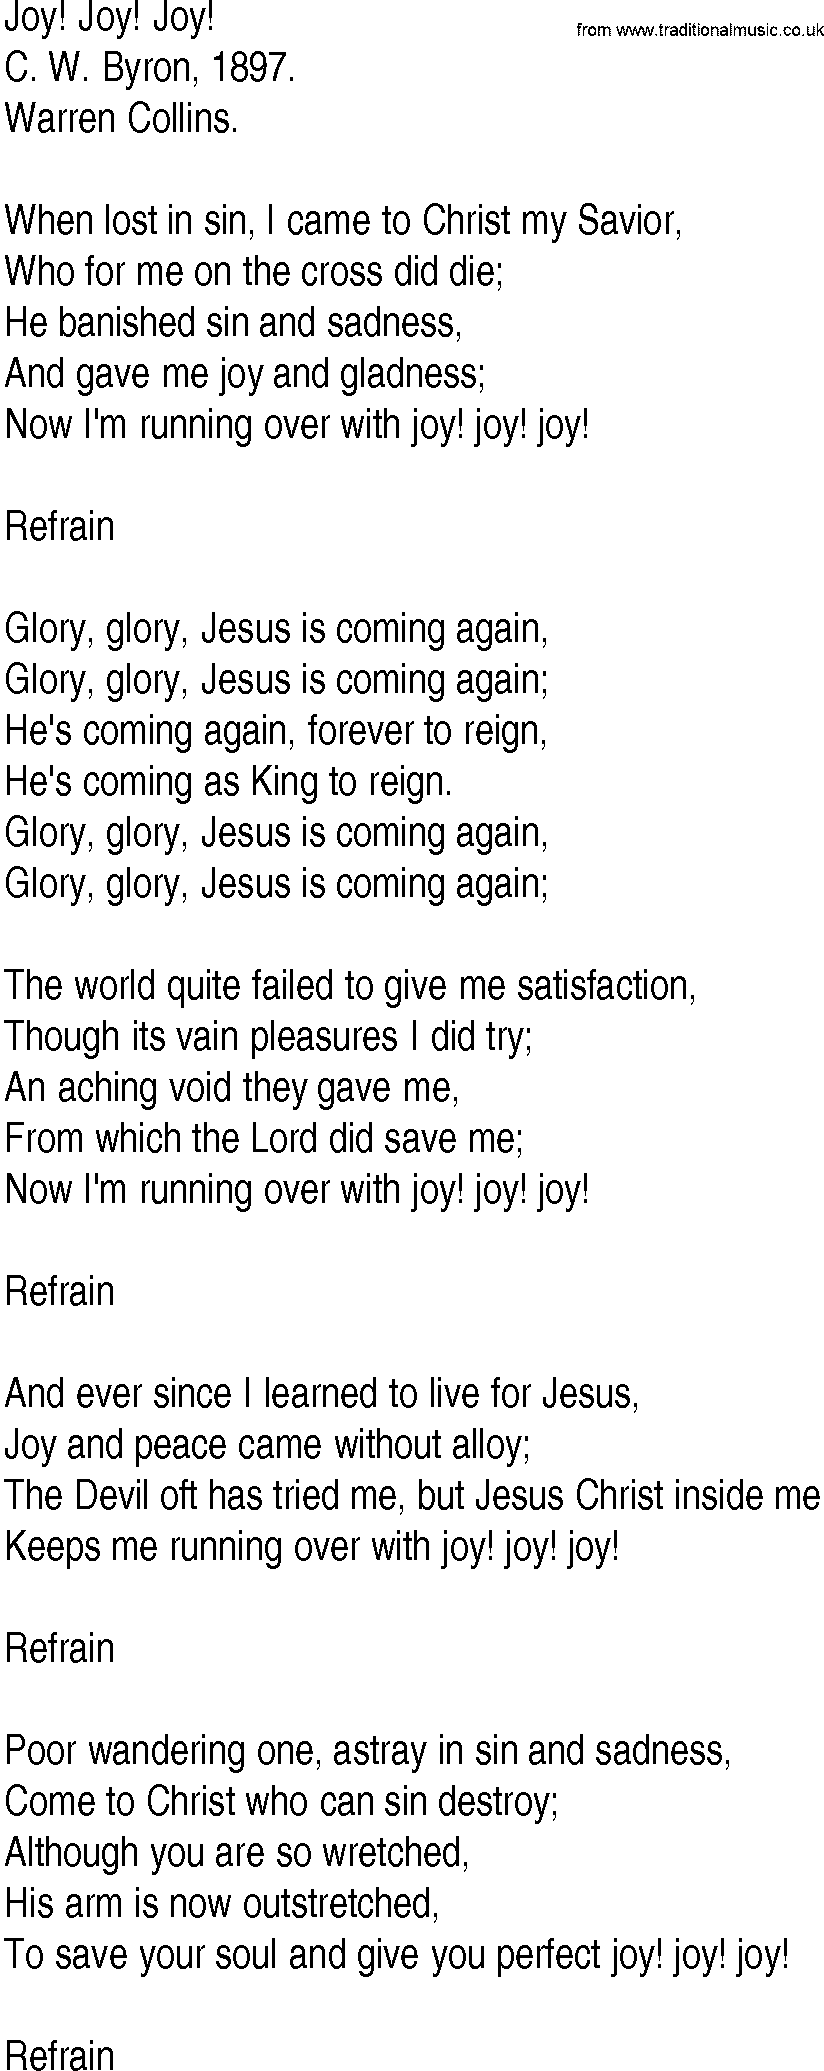 Hymn and Gospel Song: Joy! Joy! Joy! by C W Byron lyrics